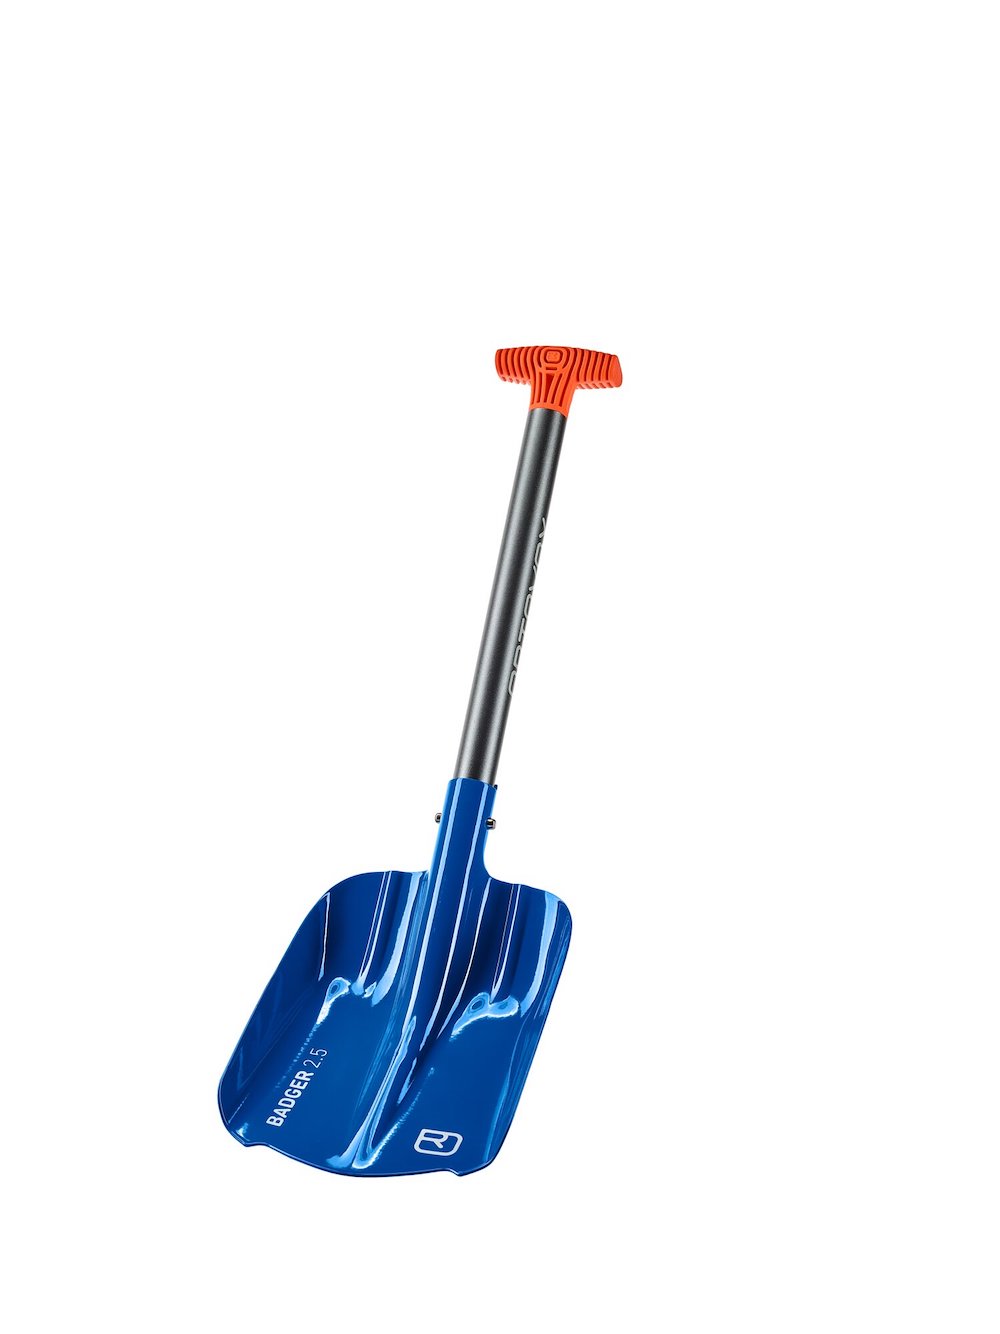 Ortovox - Shovel Badger, Lawinenschaufel